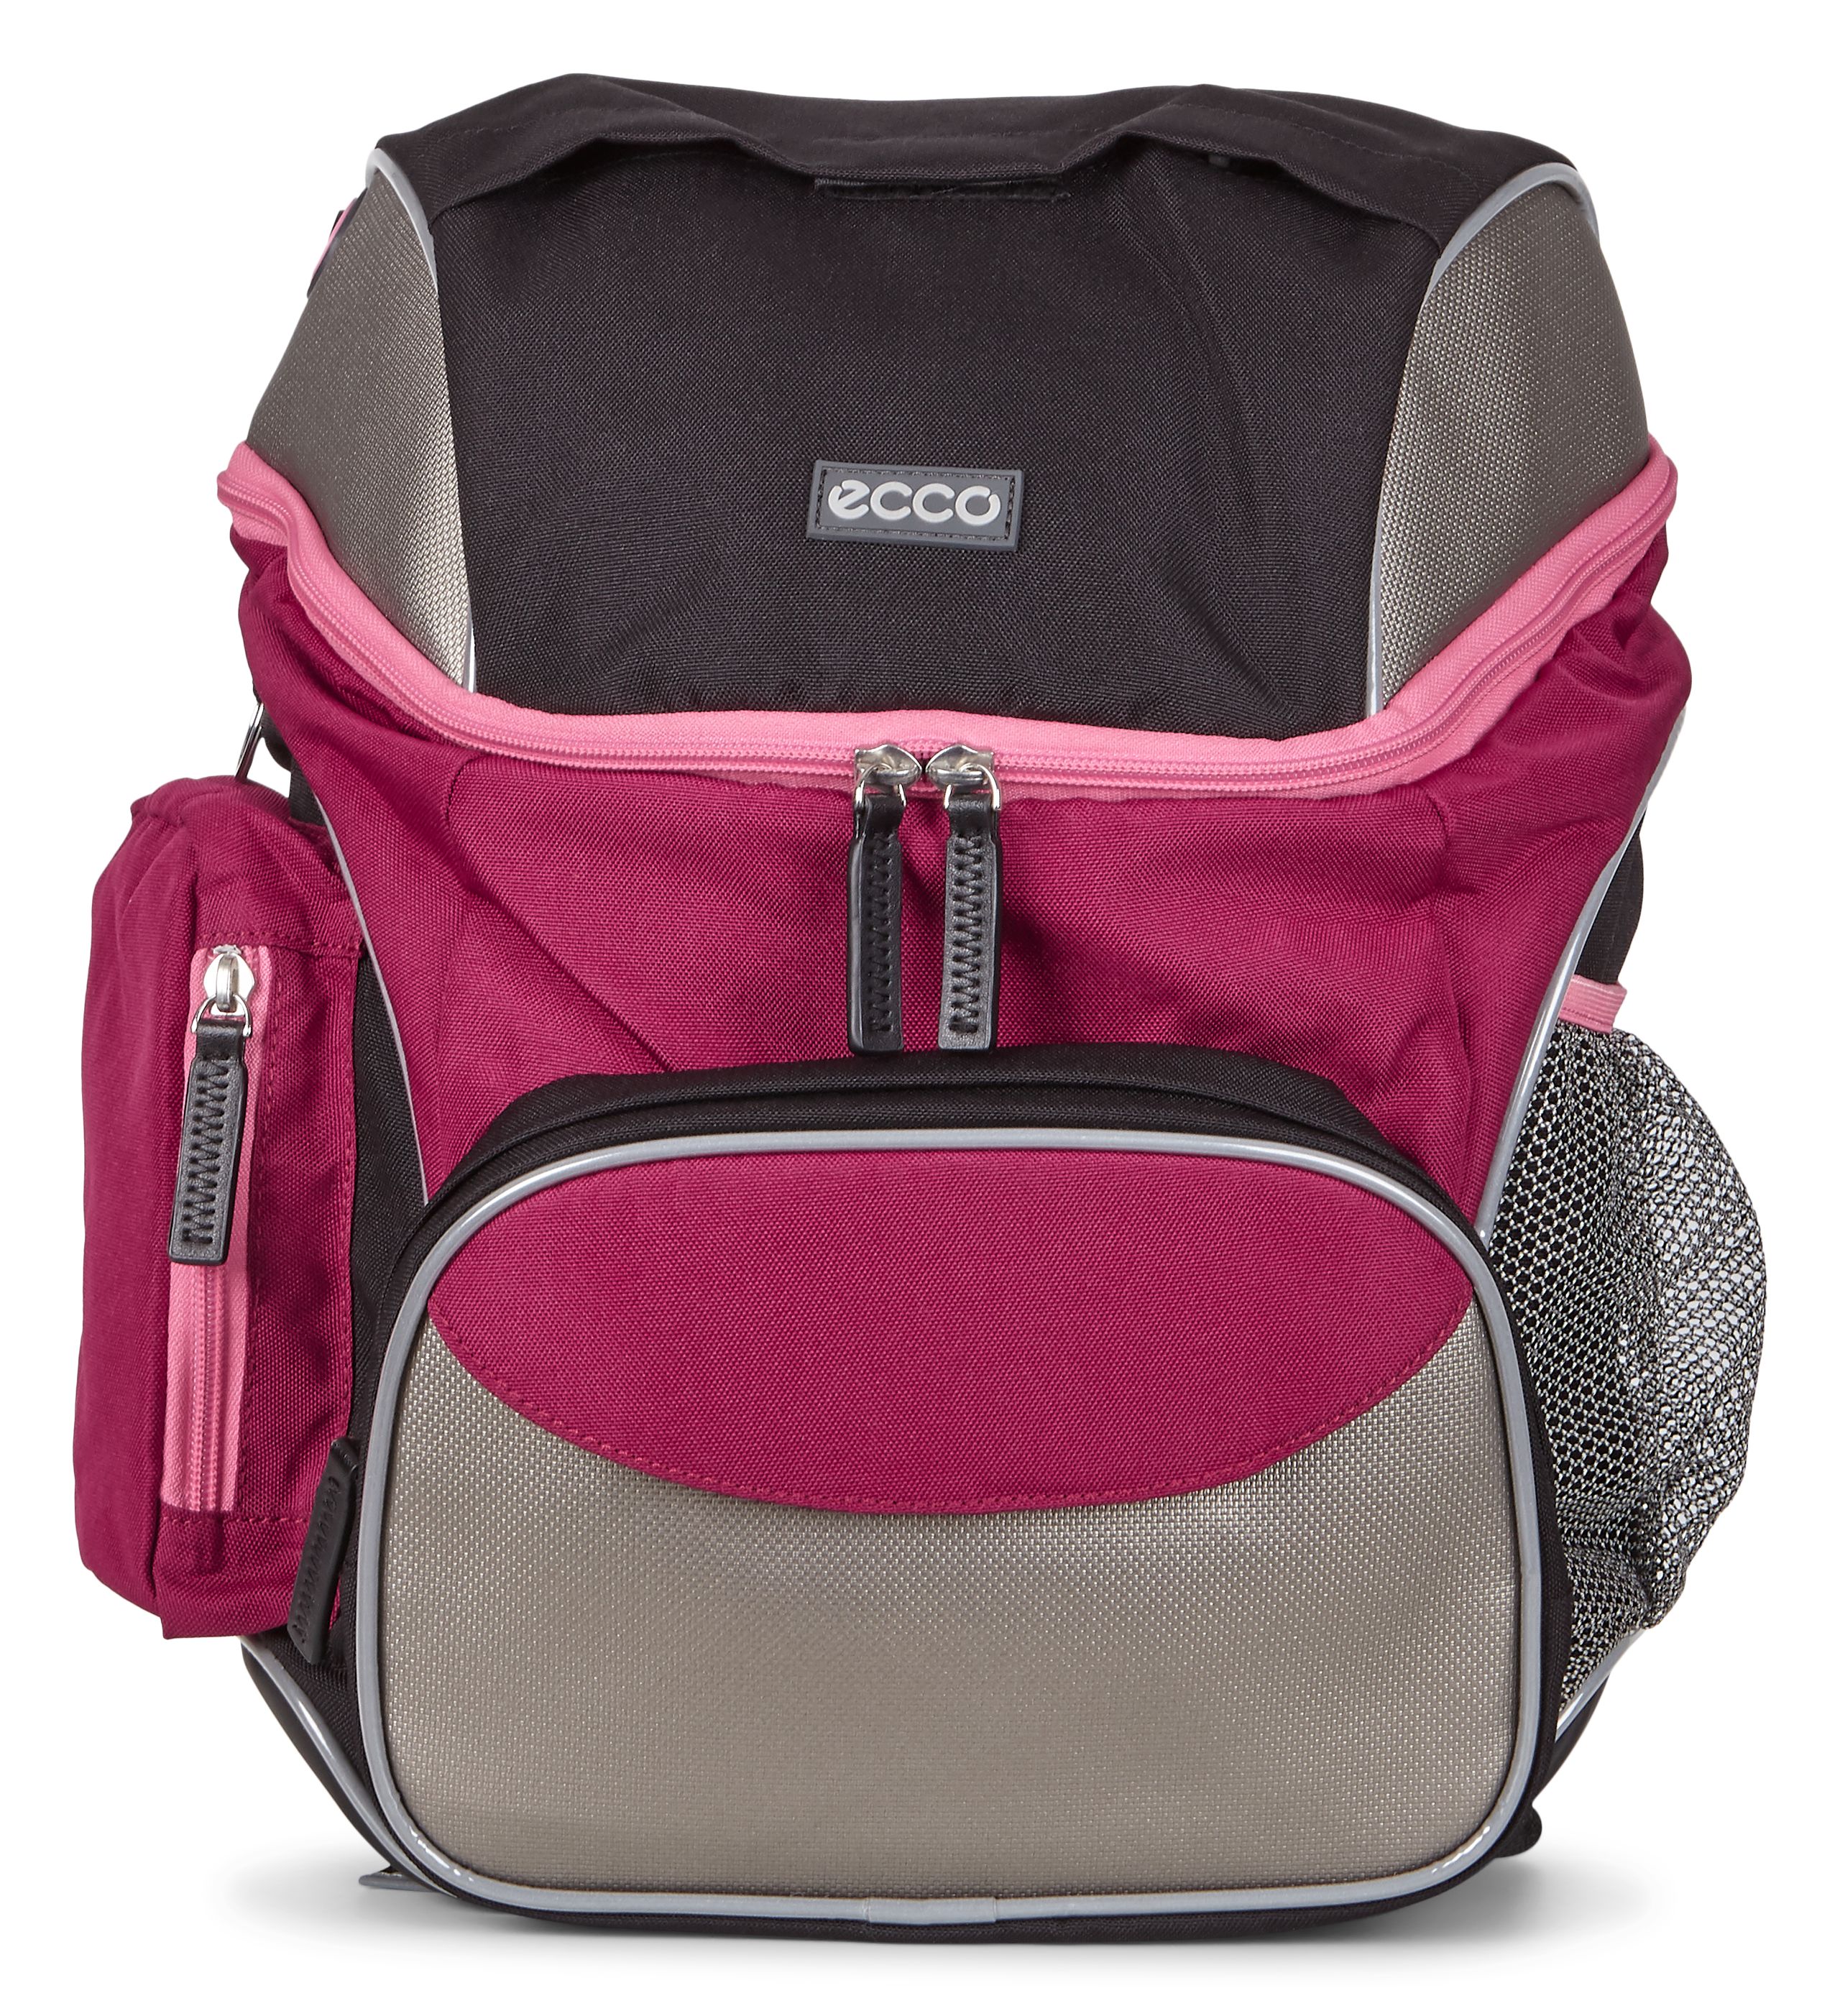 B2S Backpack 4-6yrs. - ECCO.com